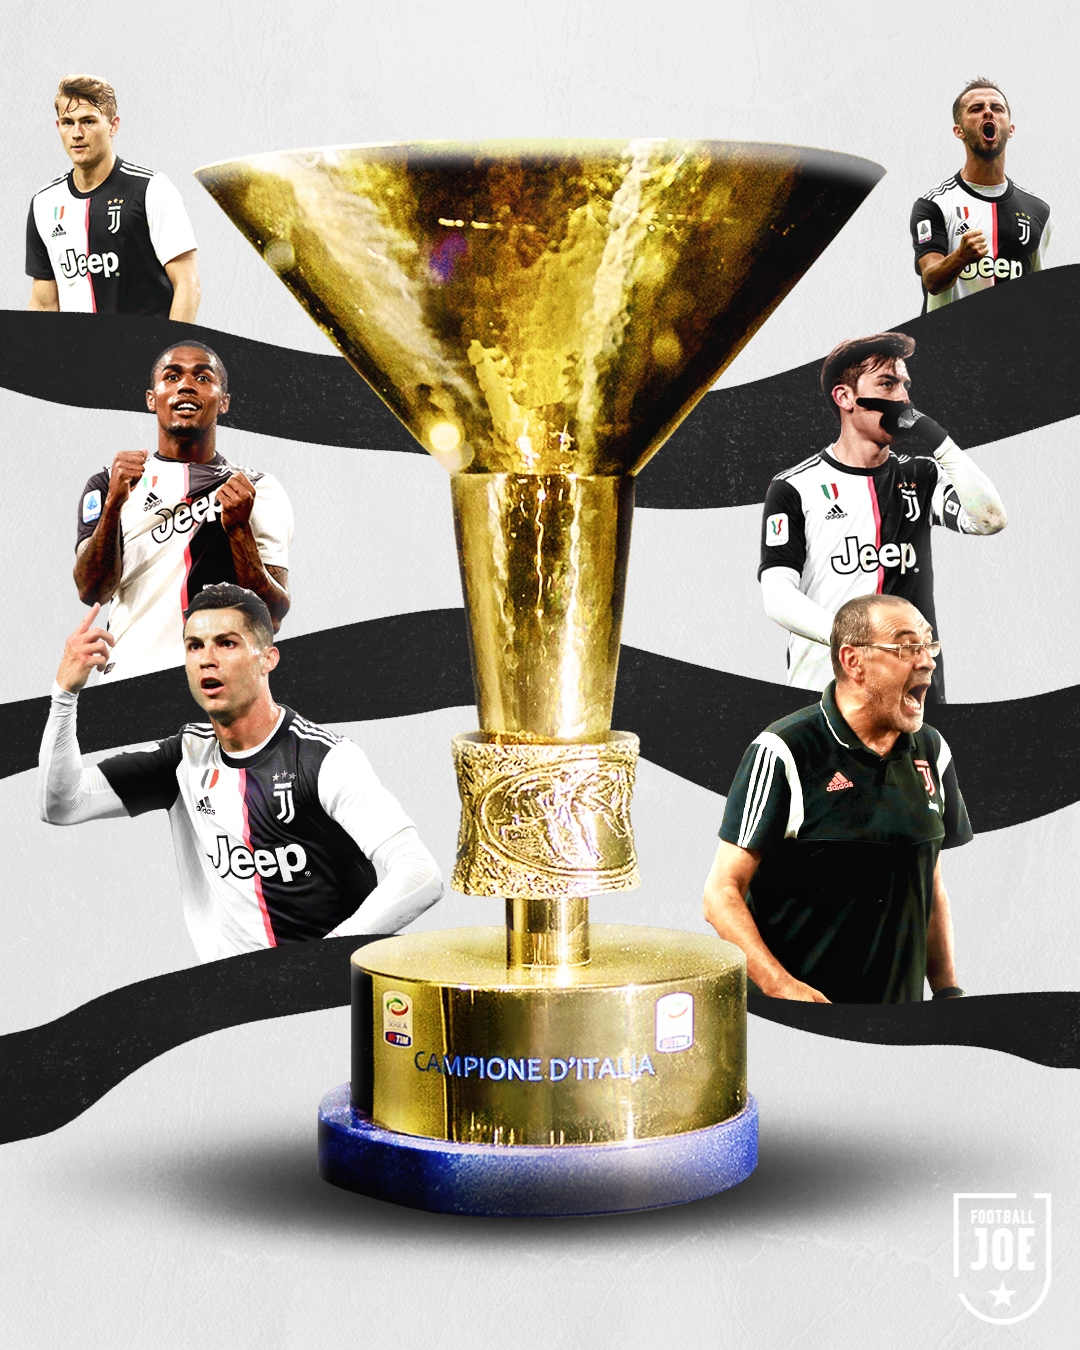 Juventus Serie A Champions 2020 wallpaper